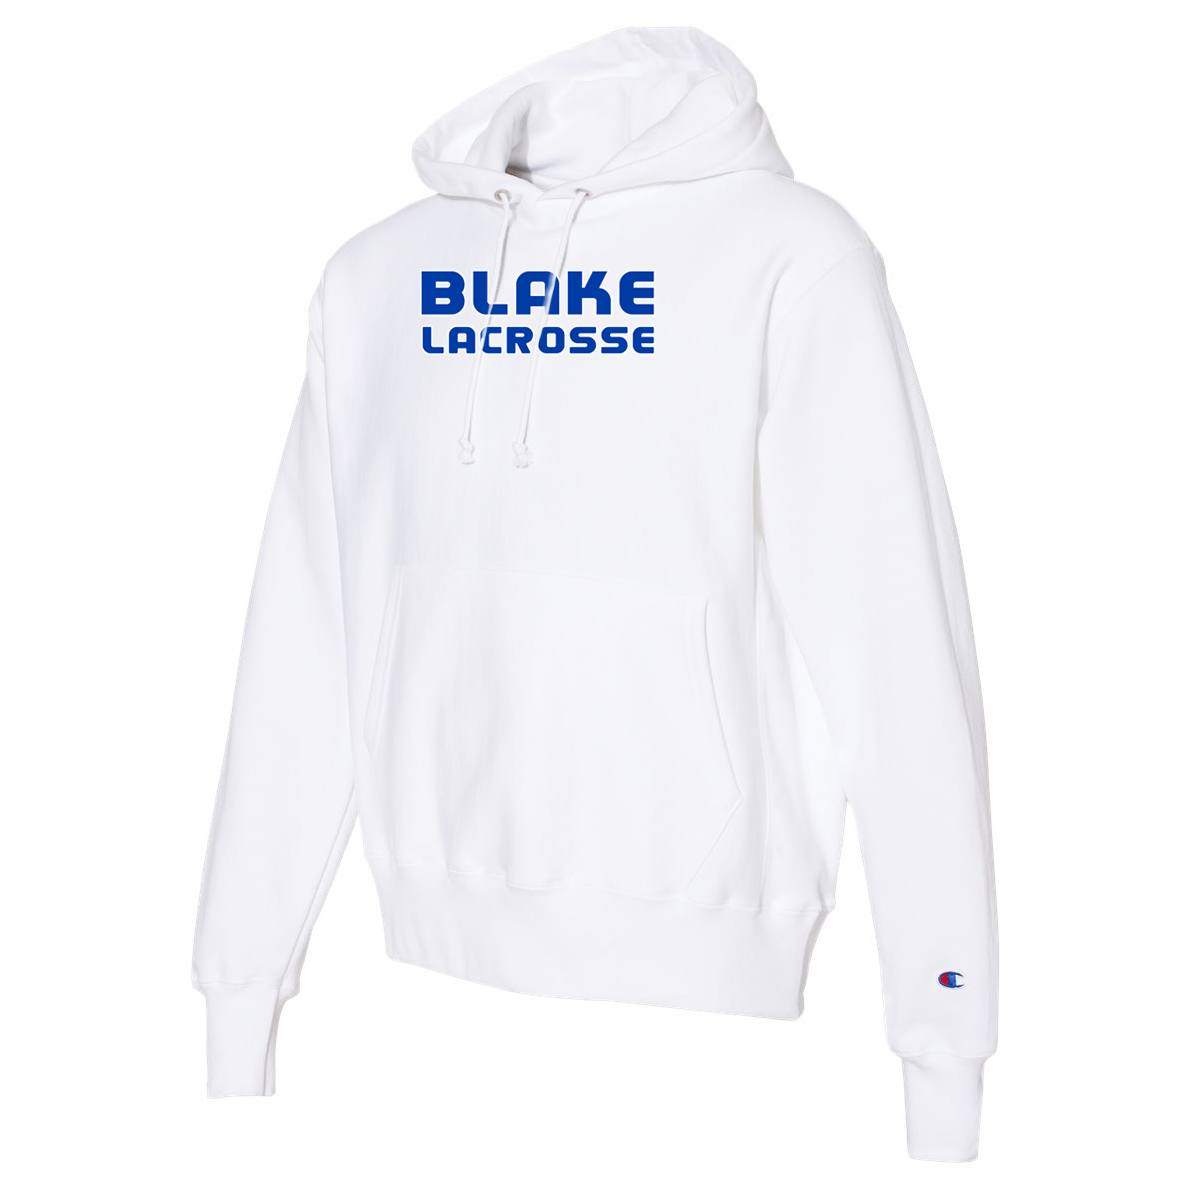 Blake Lacrosse Champion Sweatshirt